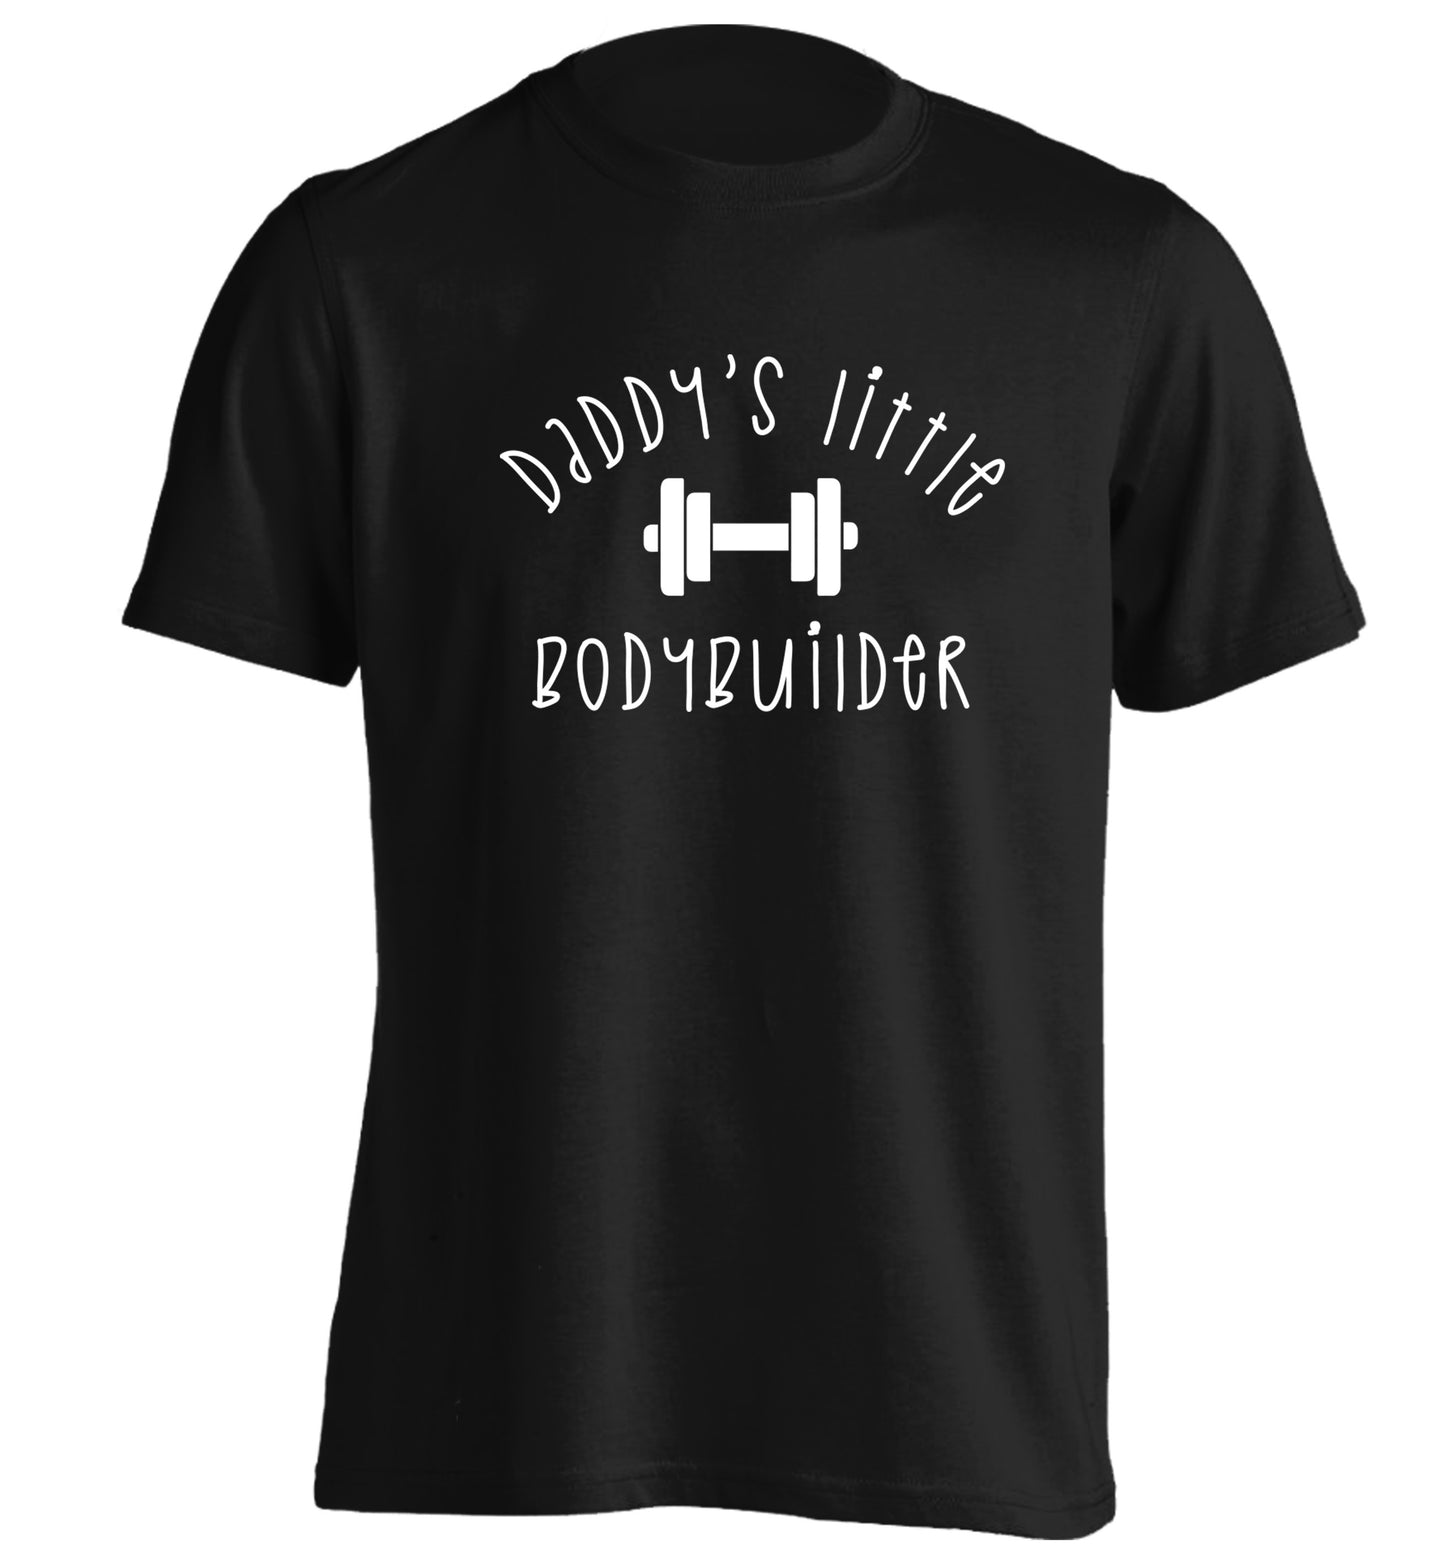 Daddy's little bodybuilder adults unisex black Tshirt 2XL